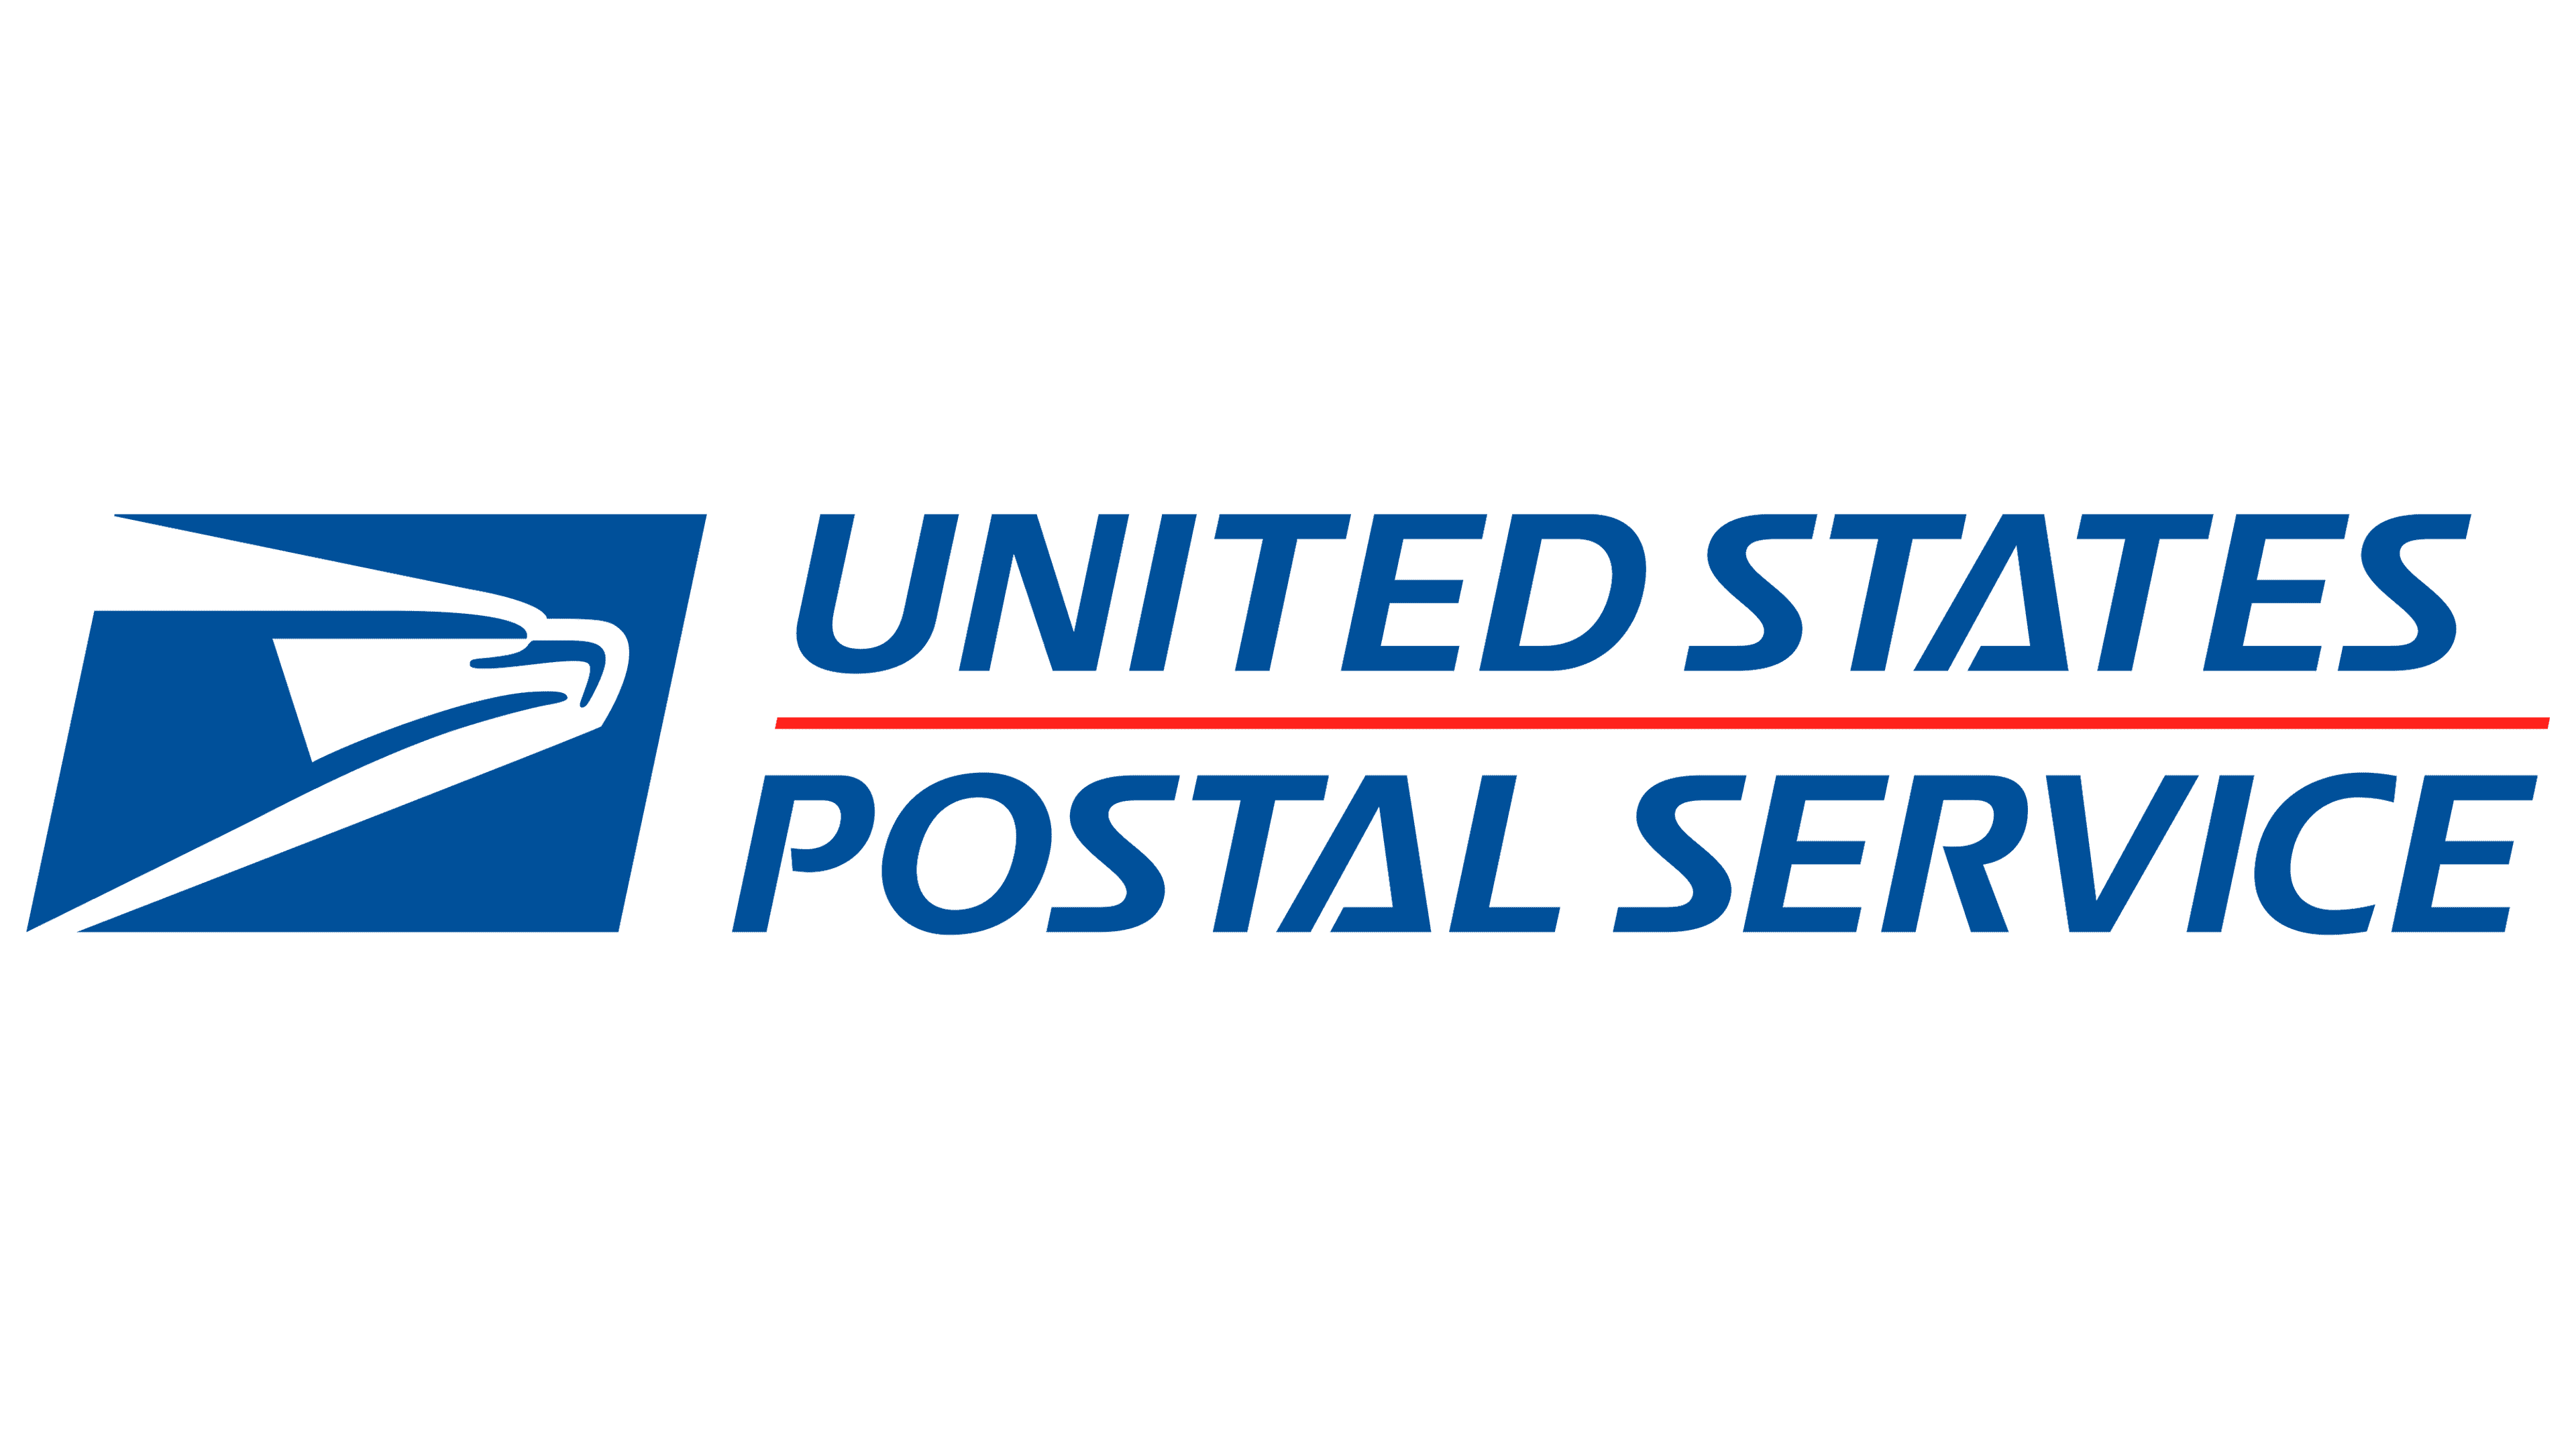 USPS: The United States Postal Service